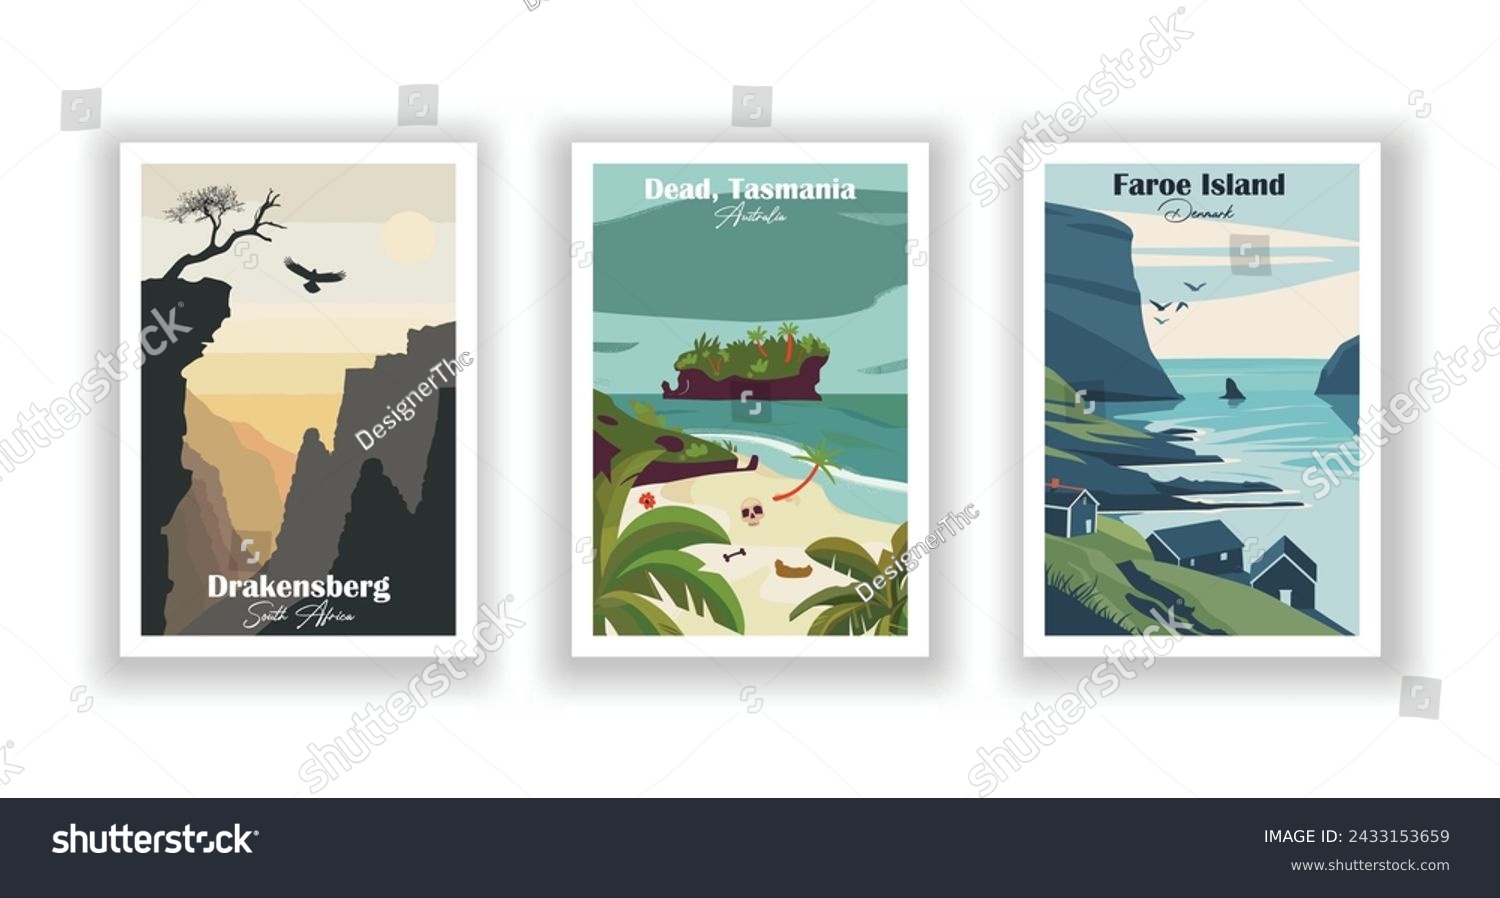 SVG of Dead, Tasmania, Australia. Drakensberg, South Africa. Faroe Island, Denmark - Set of 3 Vintage Travel Posters. Vector illustration. High Quality Prints svg